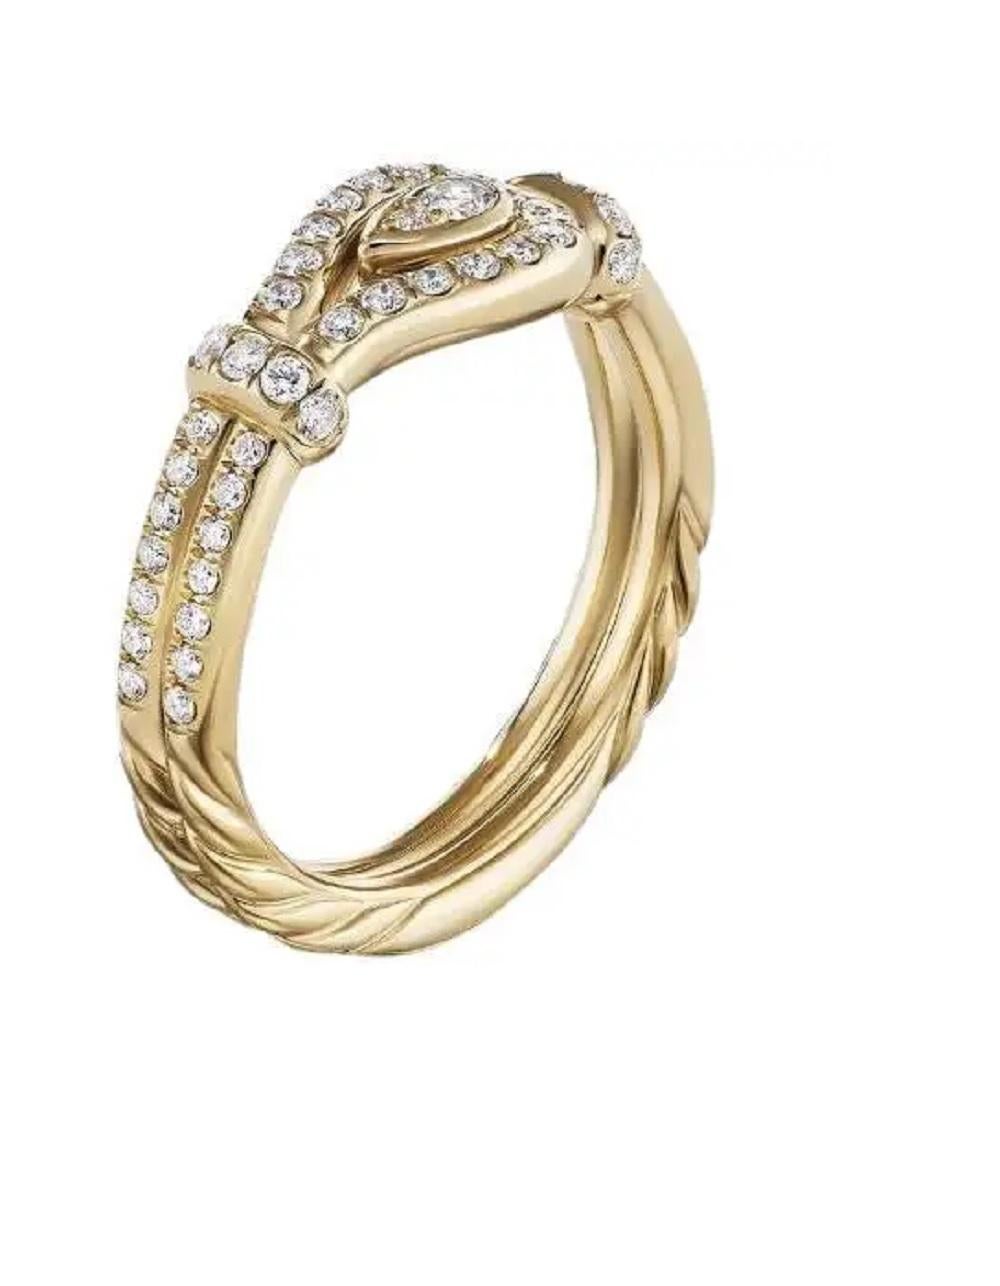 -18k Yellow Gold
-Diamonds: 0.44 total carat weight
-Ring, 4mm
-Ring size: 6.5
-Comes with David Yurman Ring  Box
-Retail: $3300